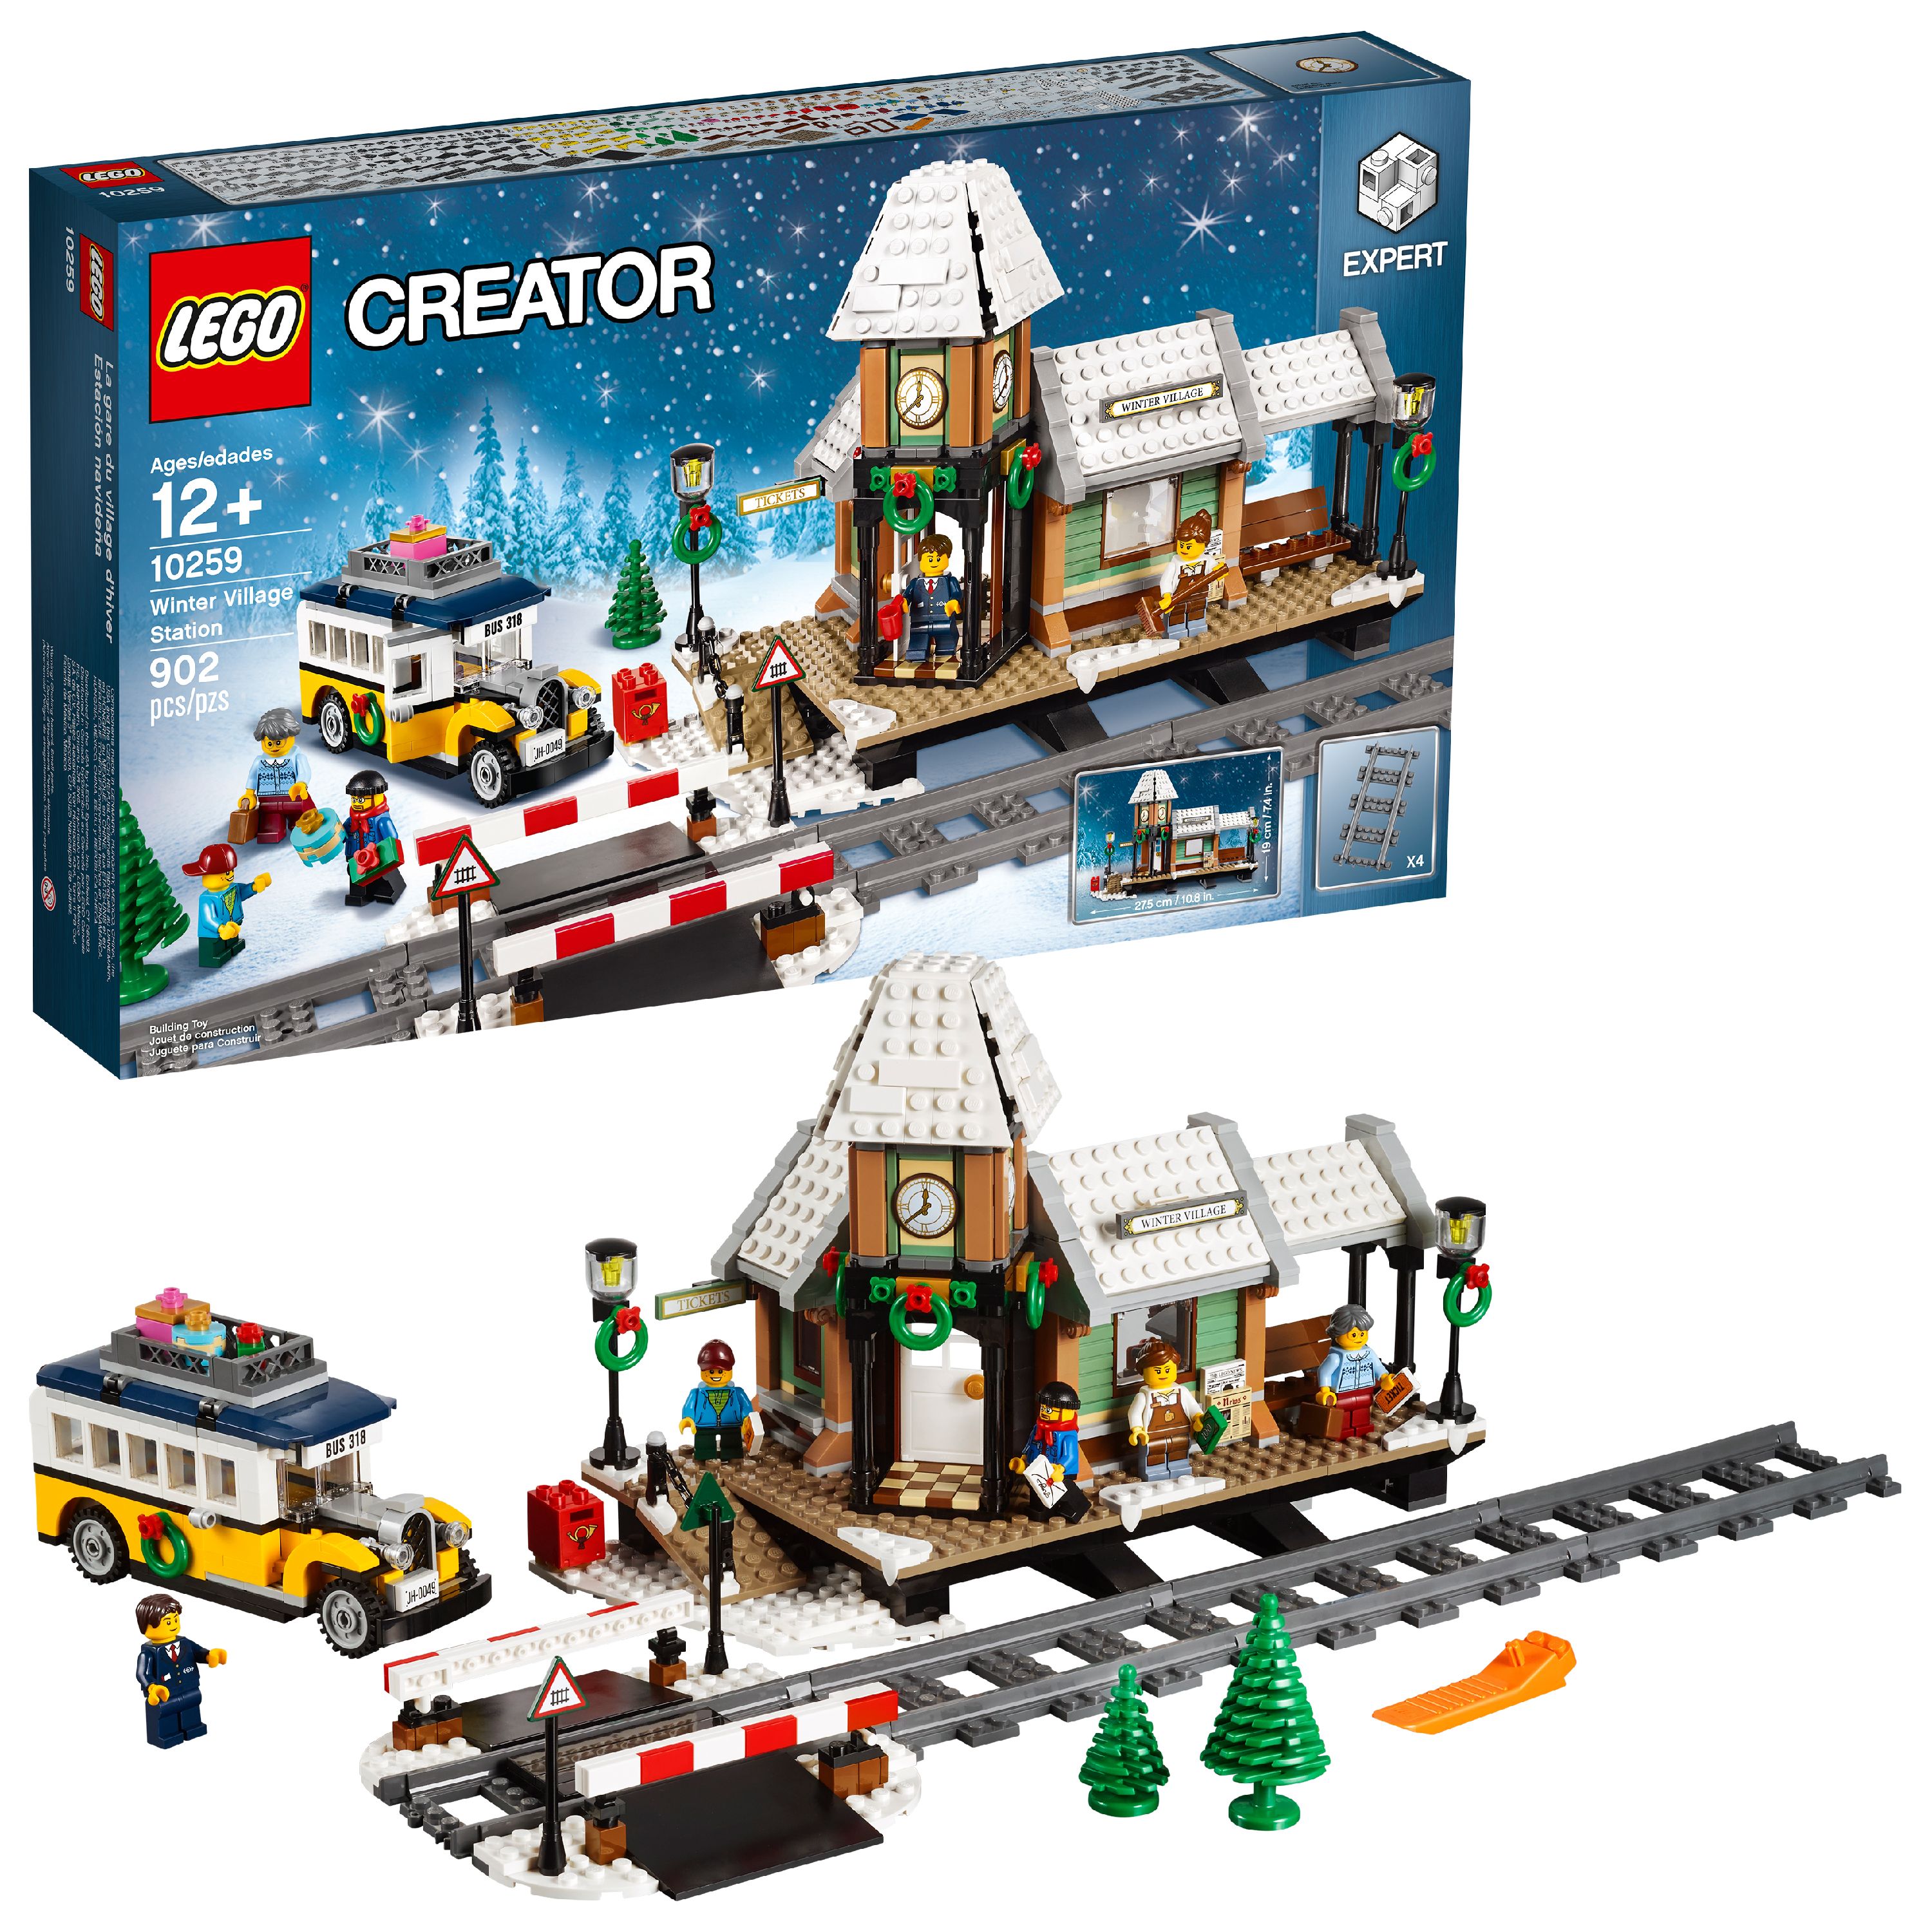 LEGO Creator Expert Winter Village Station 10259 - image 1 of 7